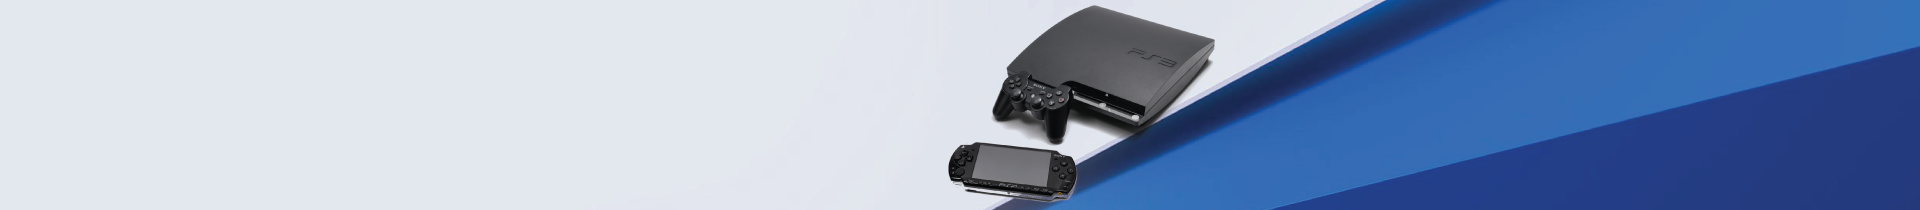 Consolas Playstation - PS3, PS2, PSP e PS Vita